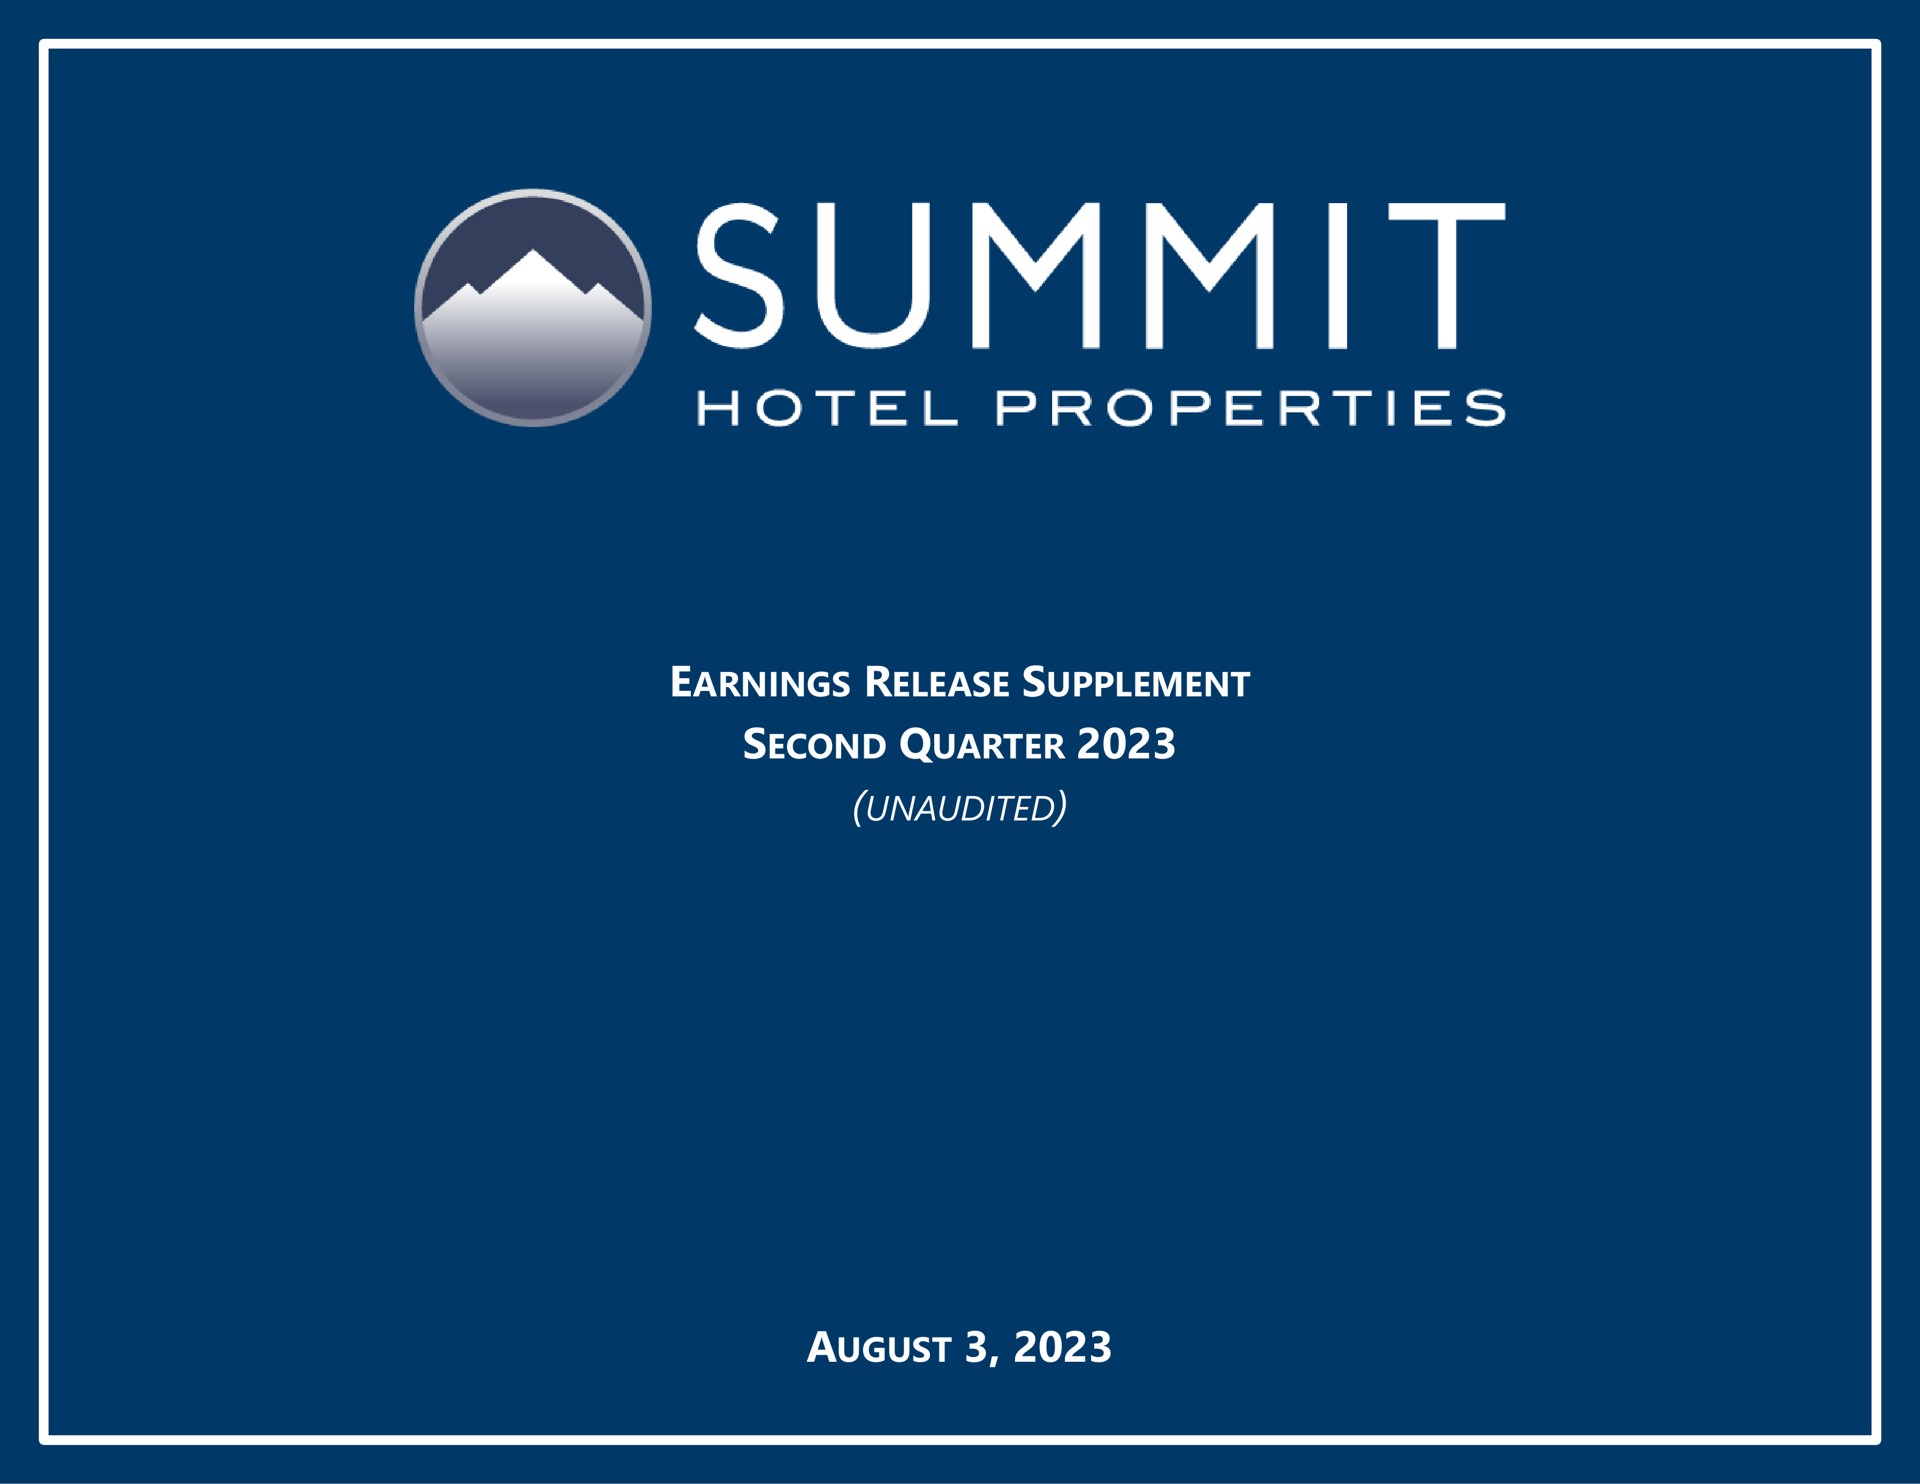 august summit hotel properties earnings release supplement second quarter unaudited | Summit Hotel Properties